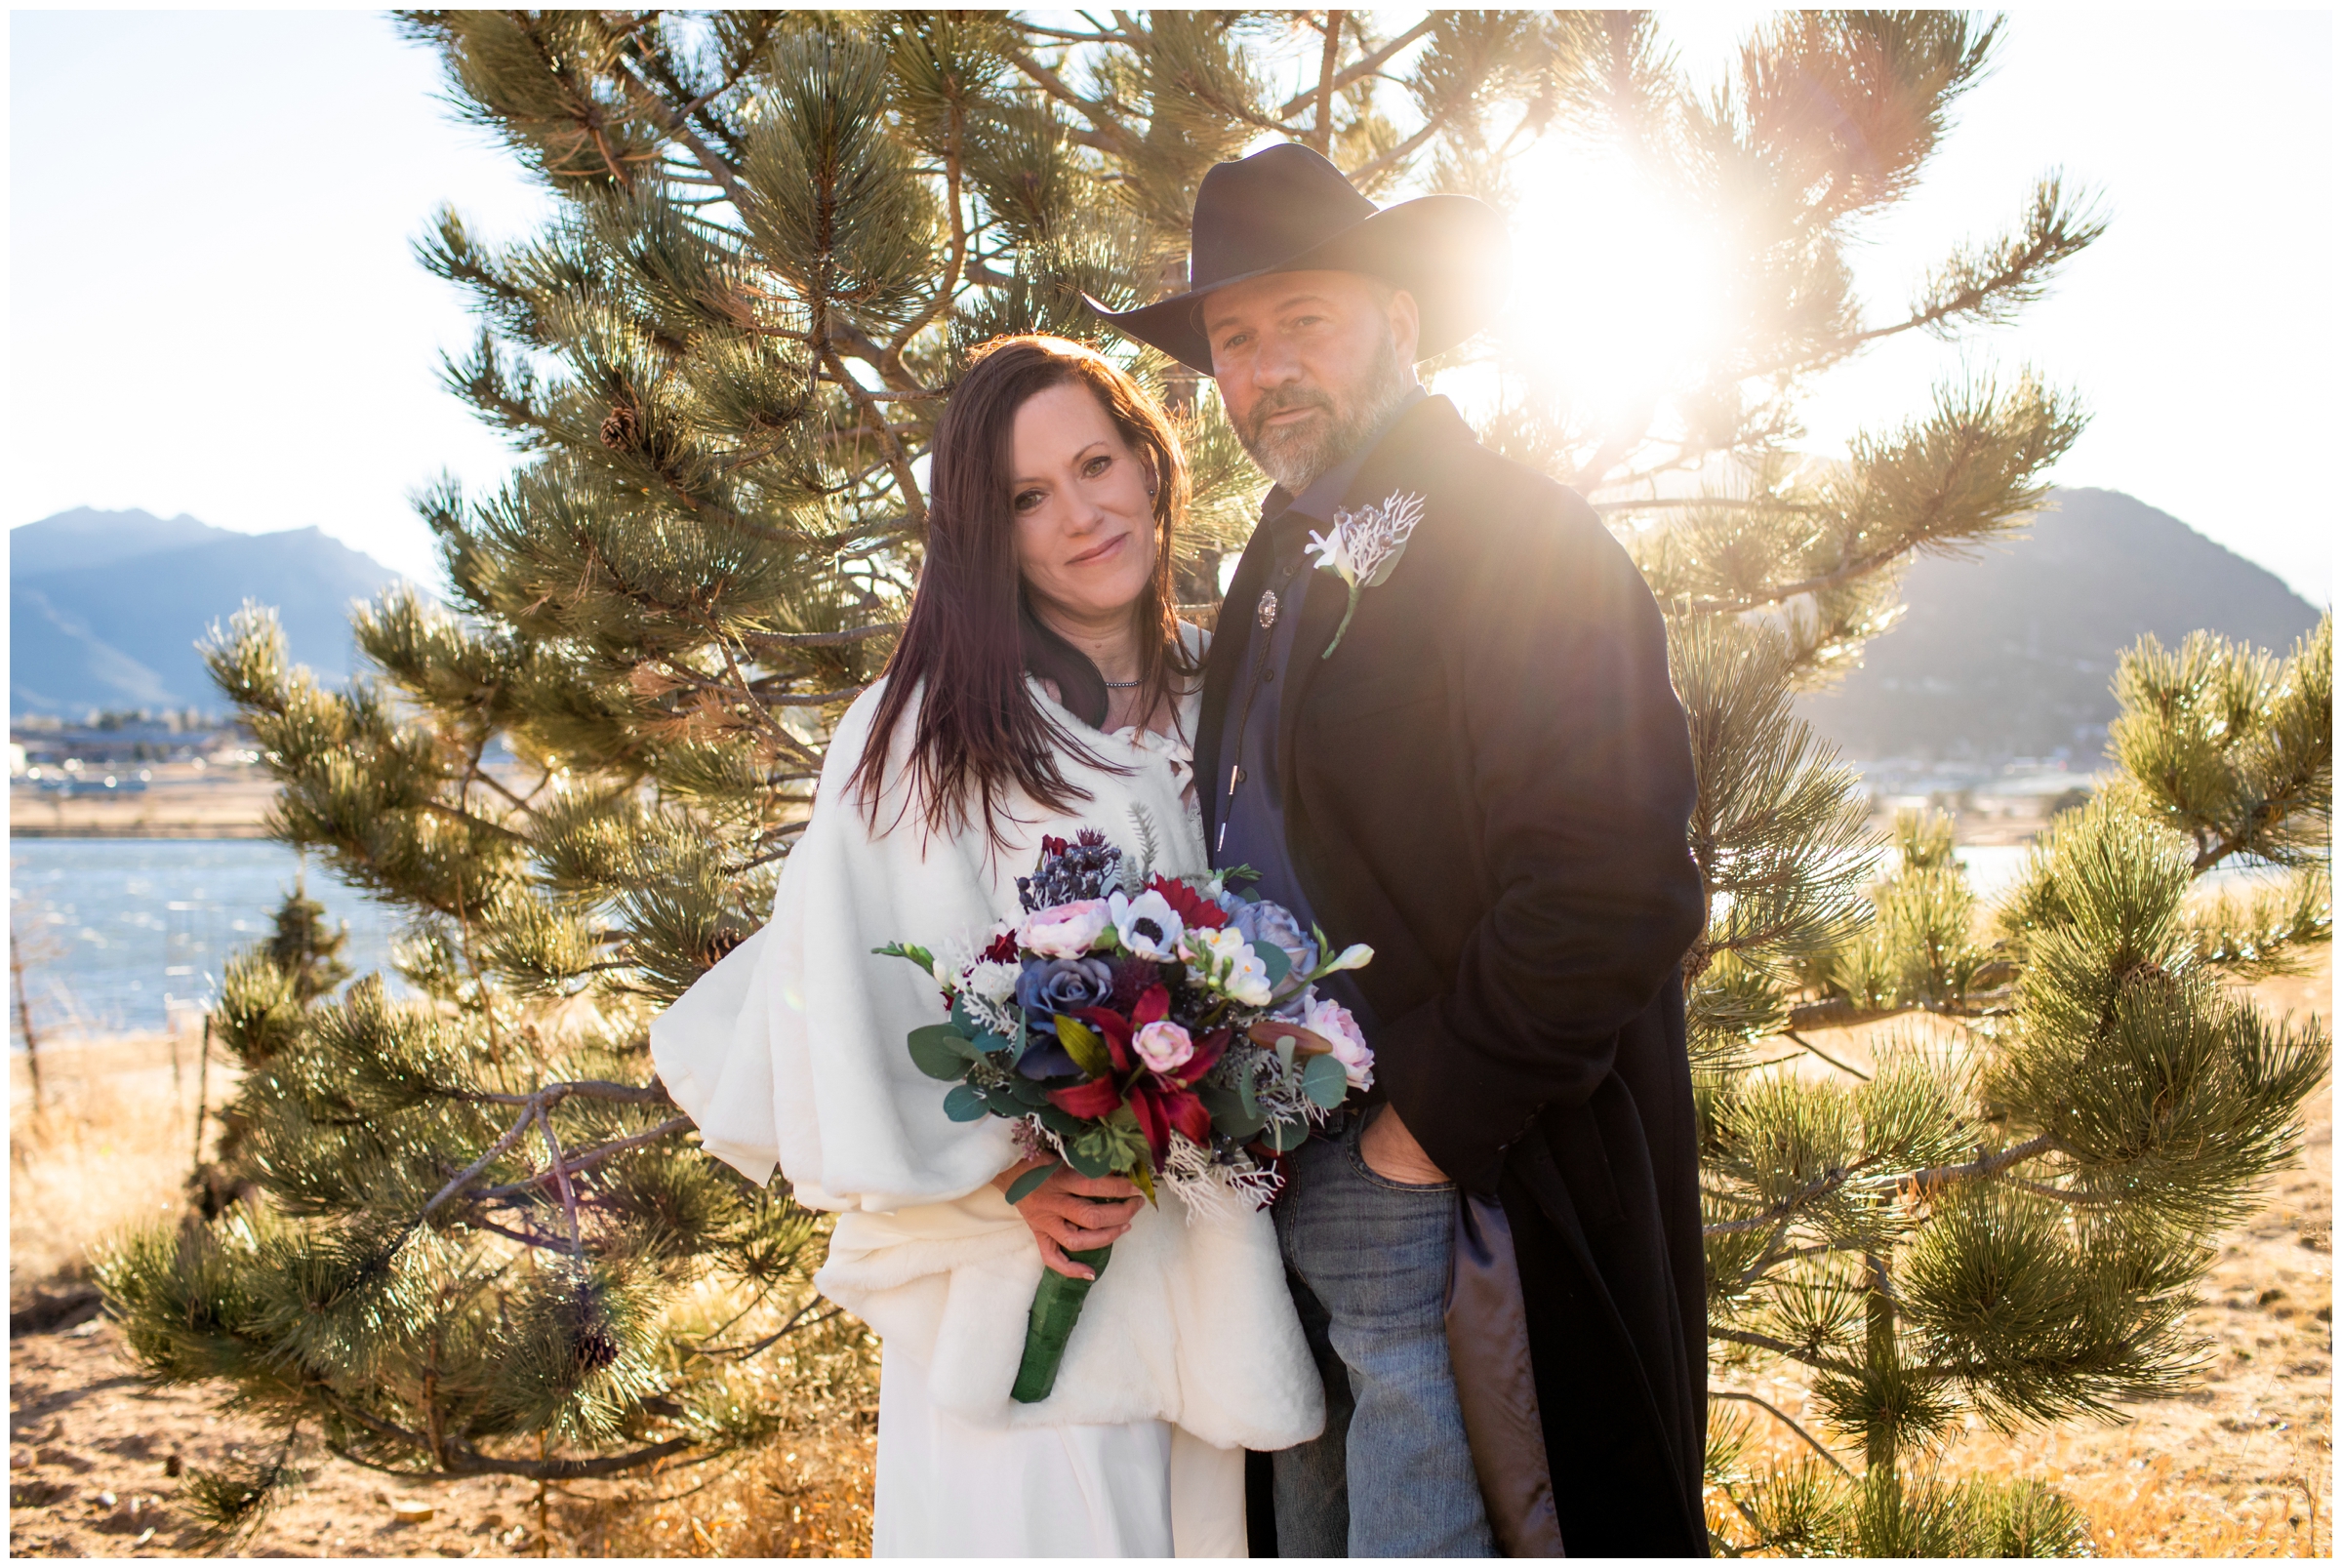 Estes Park Resort wedding photos during winter by Colorado elopement photographer Plum Pretty Photography